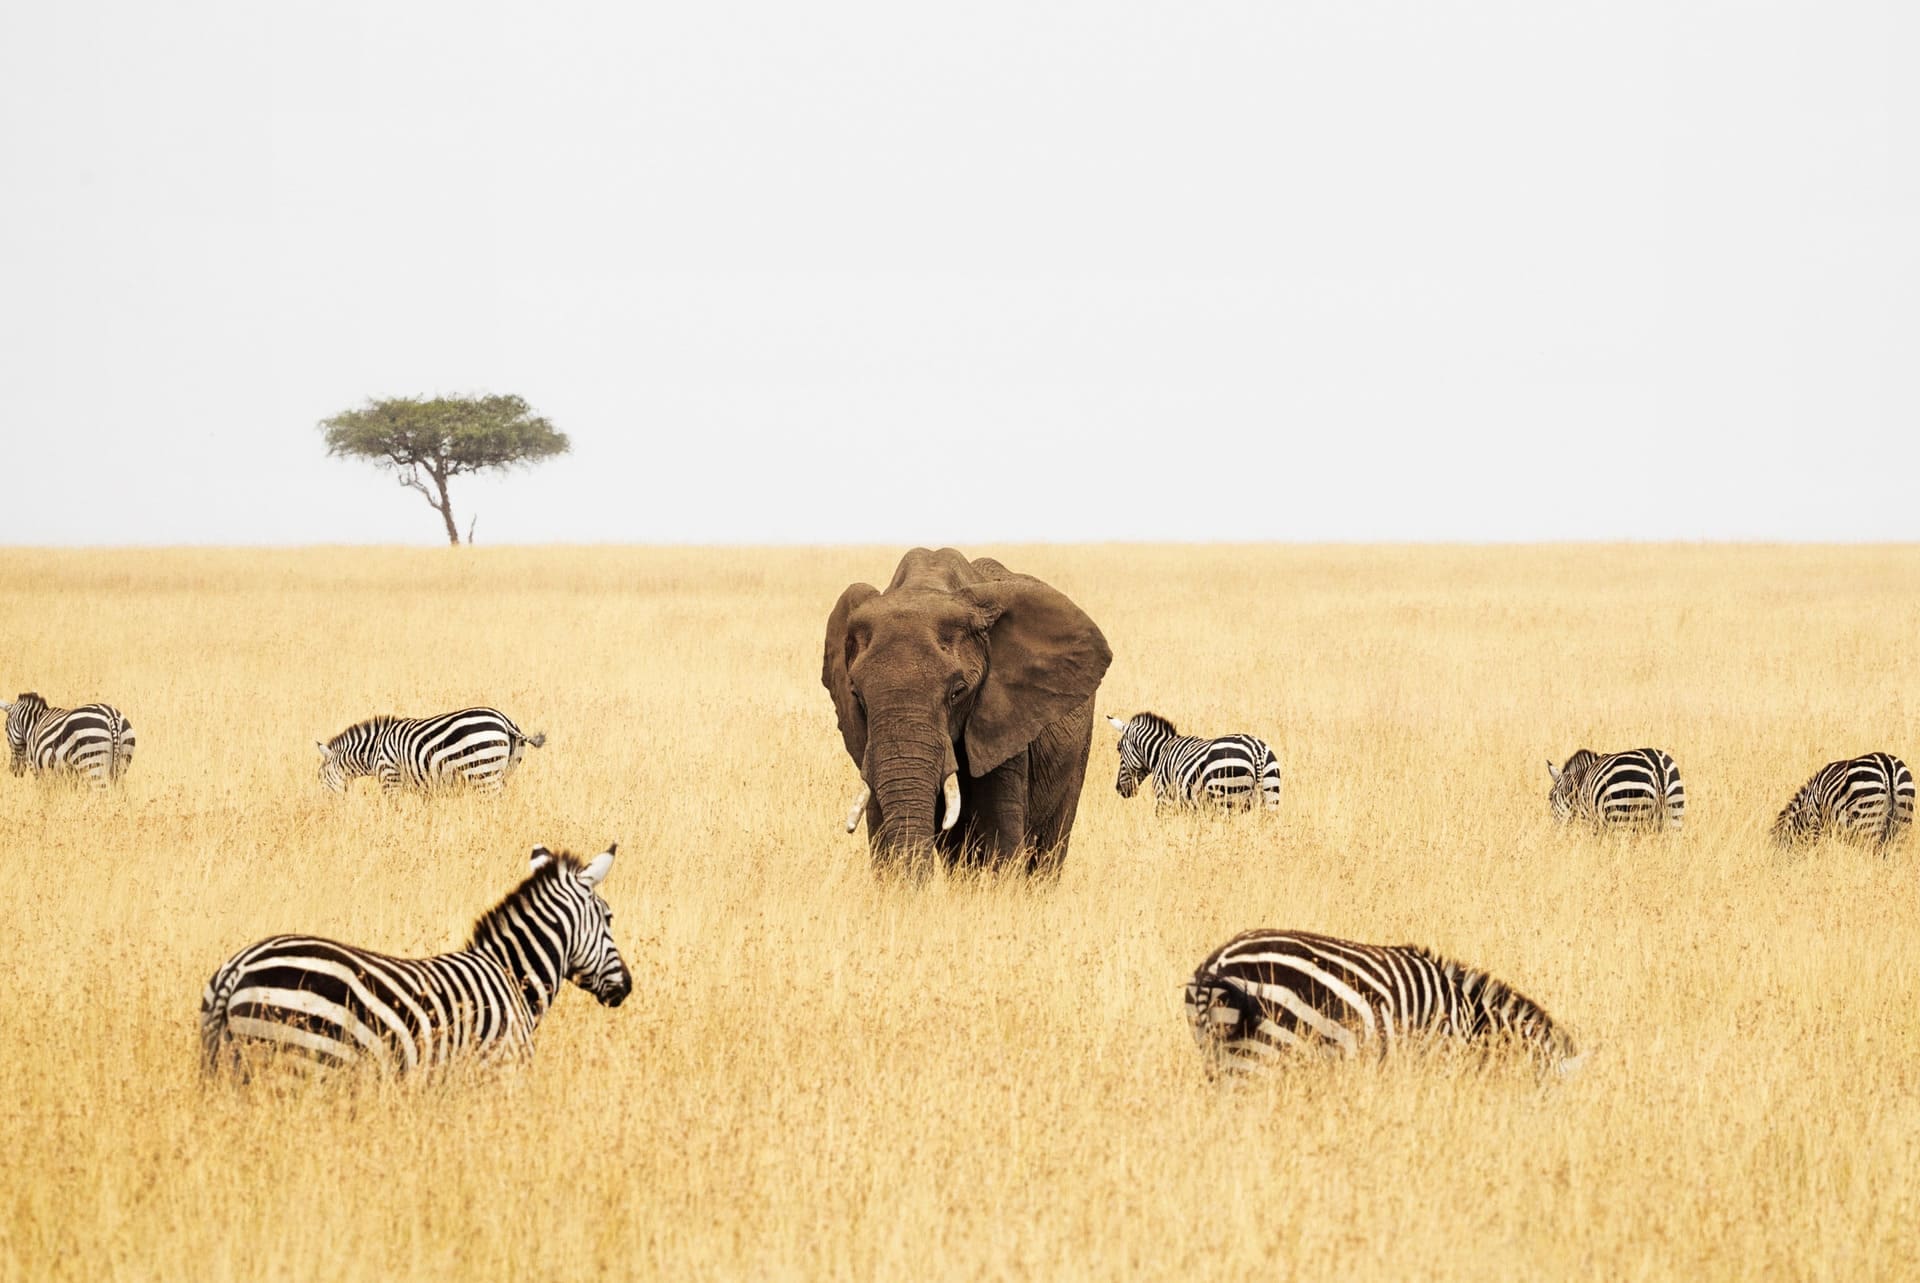 Vista elefante rodeado de zebras en Kenia